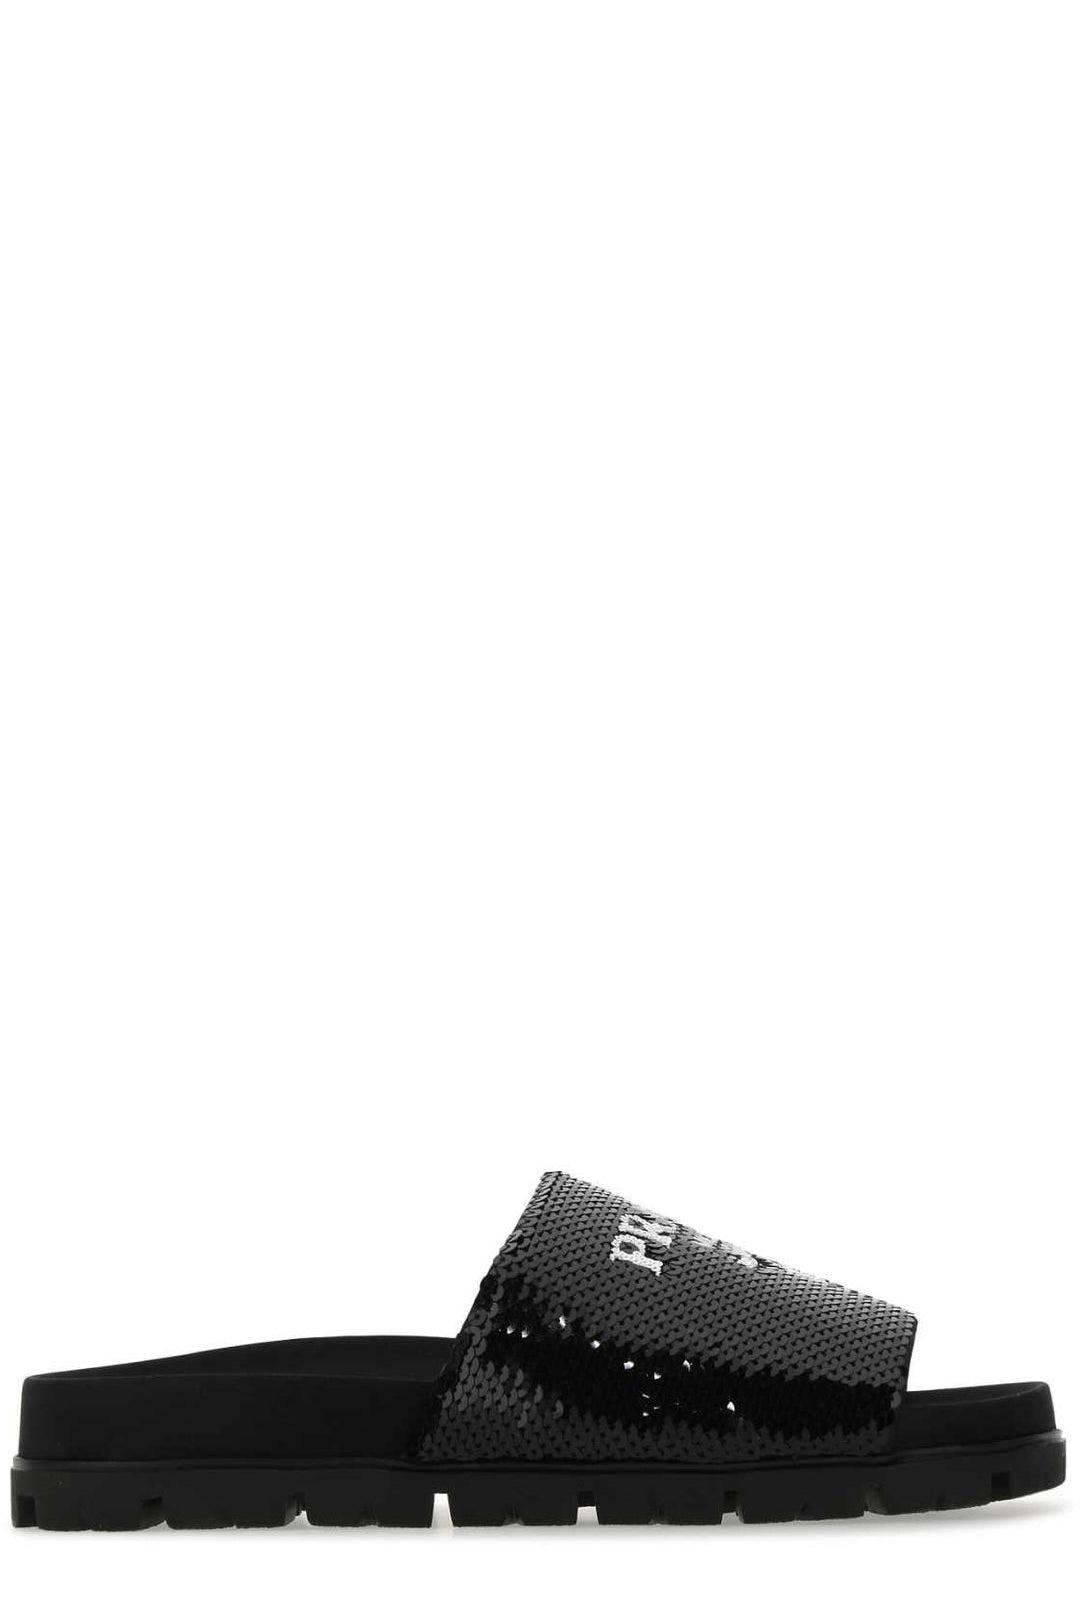 Prada Logo Detailed Sequin Slides in Black | Lyst